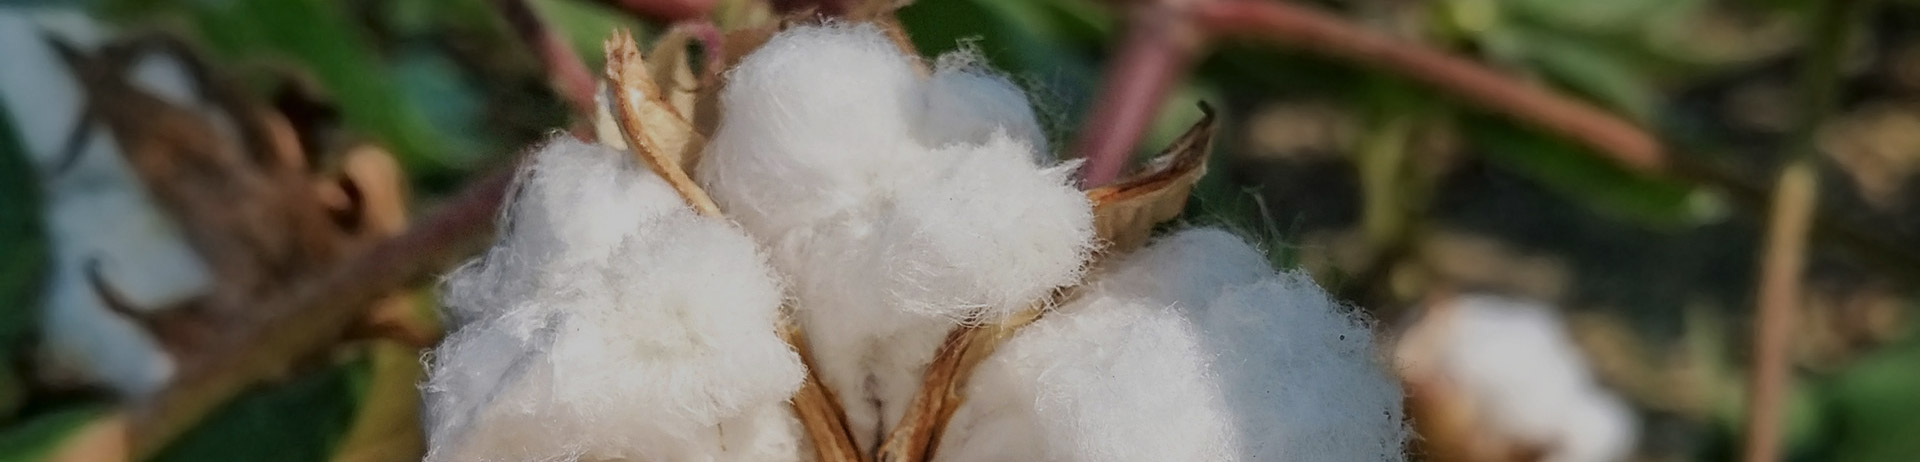 technology in La era del algodón